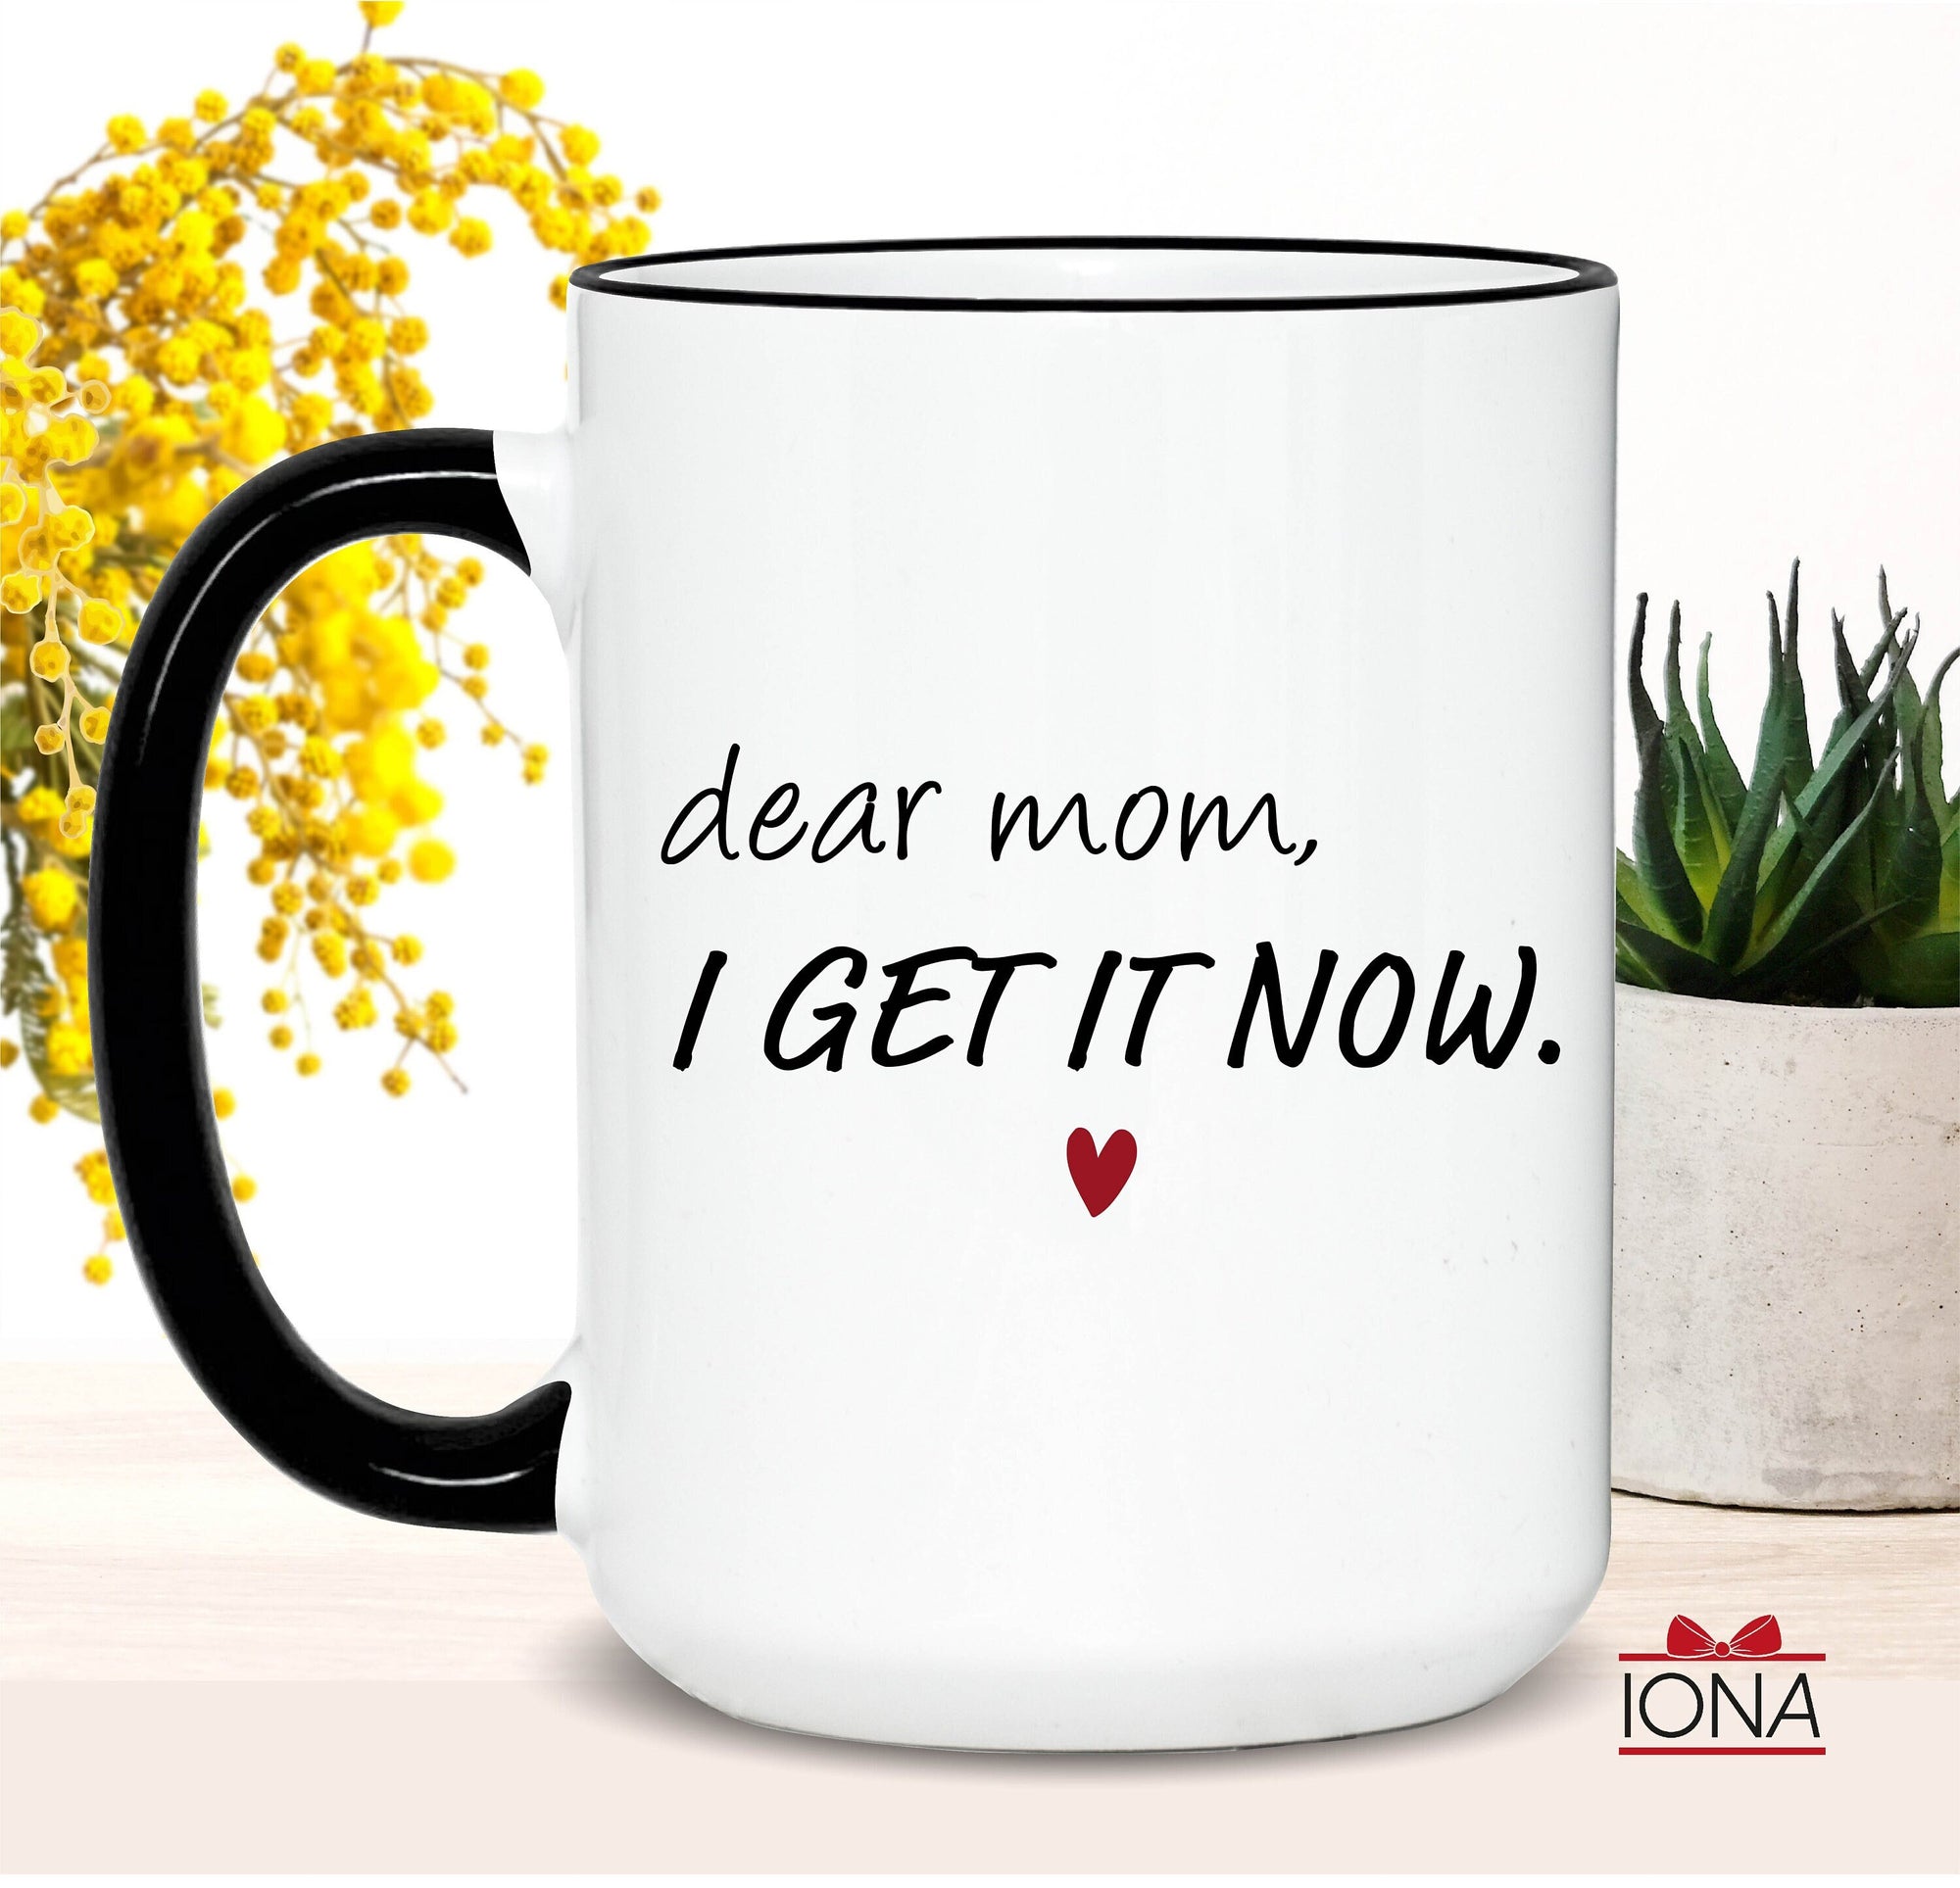 Mom Coffee Mug, Funny Mother's Day Mug, Dear Mom I Get It Now, Novelty Ceramic Mug, Coffee Cup Gift, Mom Gift, Mothers Day Gift Idea